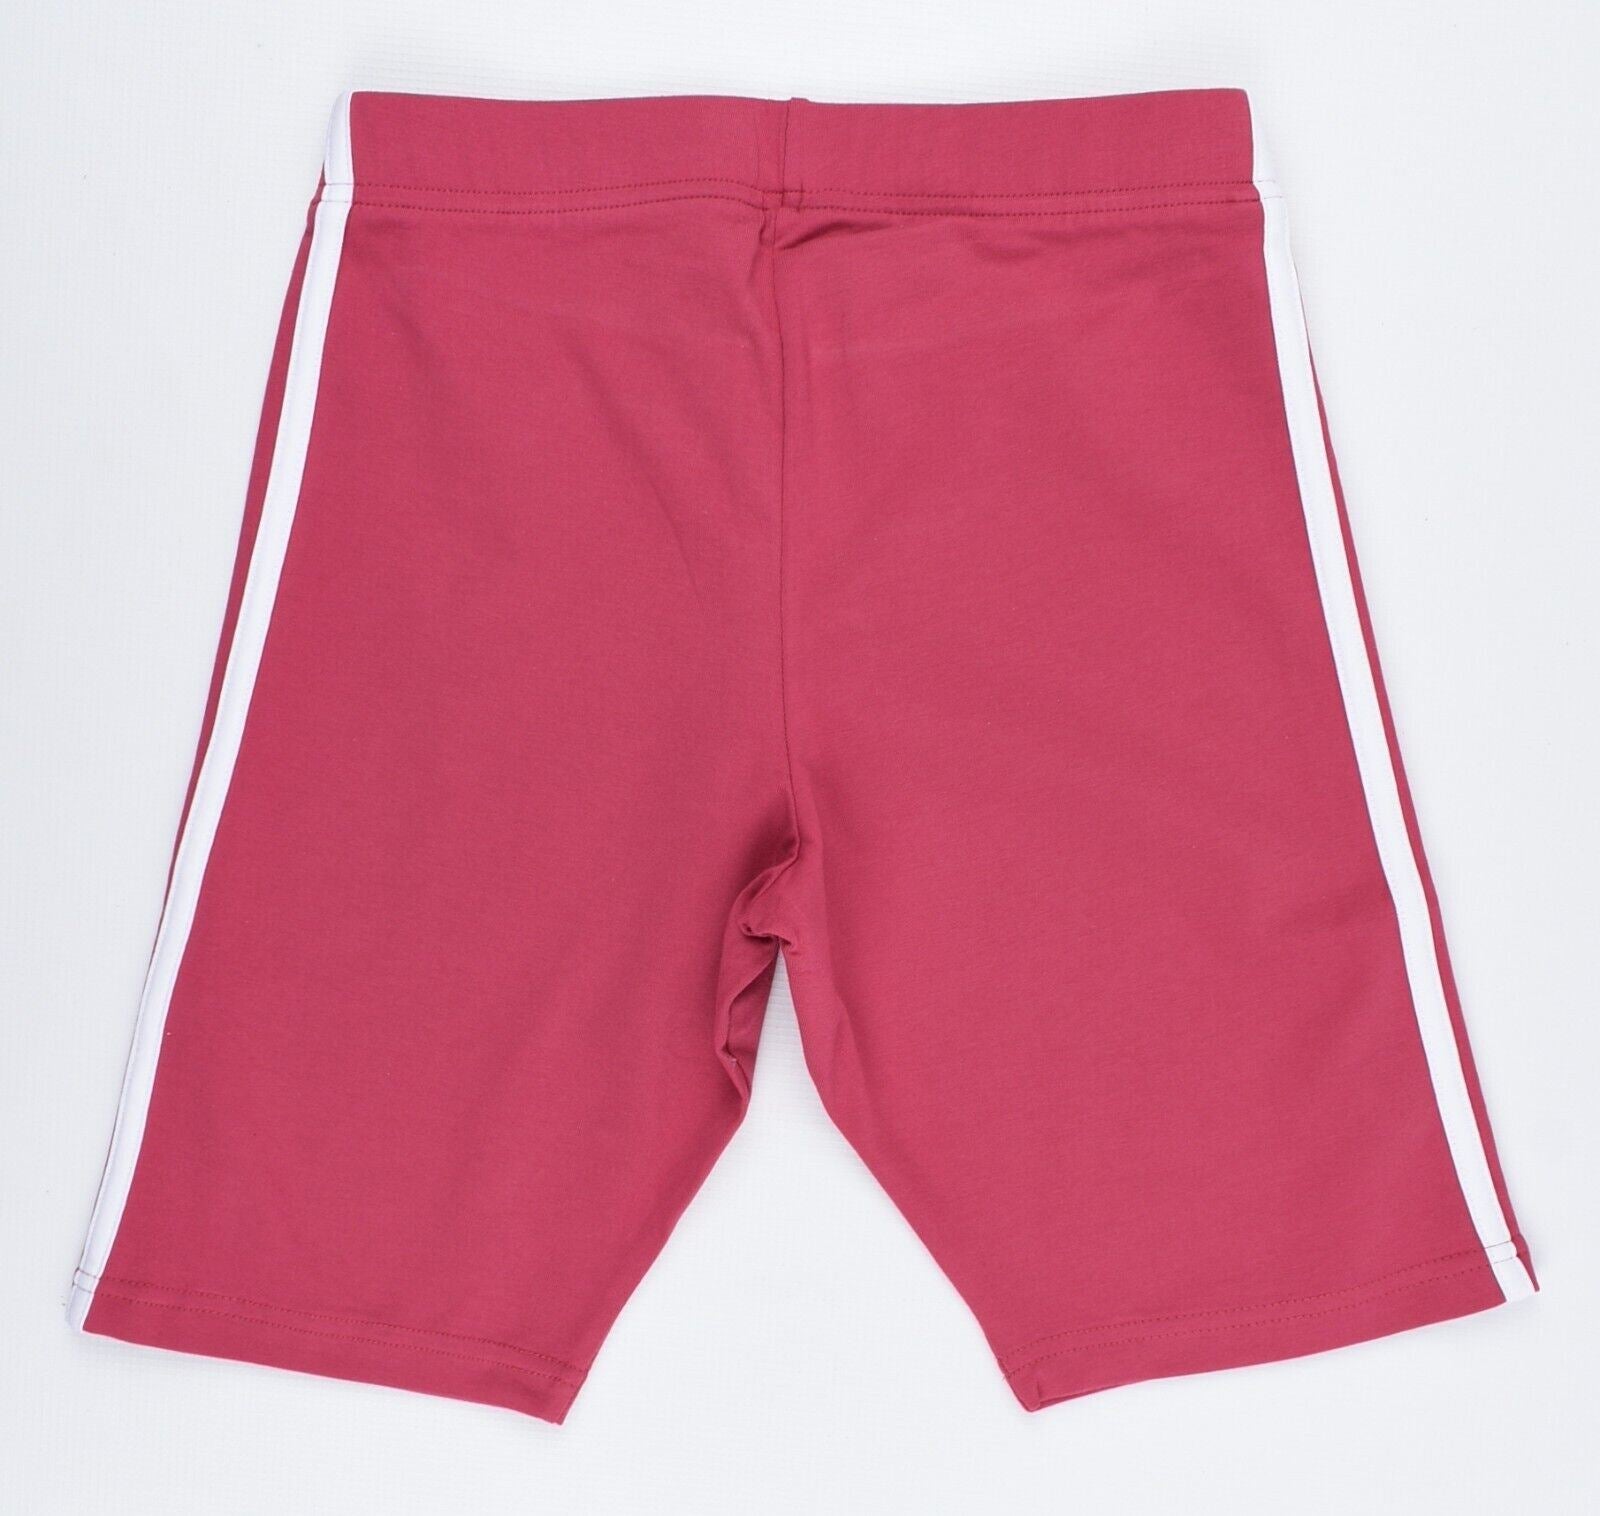 ADIDAS Women's 3 Stripes Essential Short Leggings Shorts, Pink, size XS (UK 4-6)